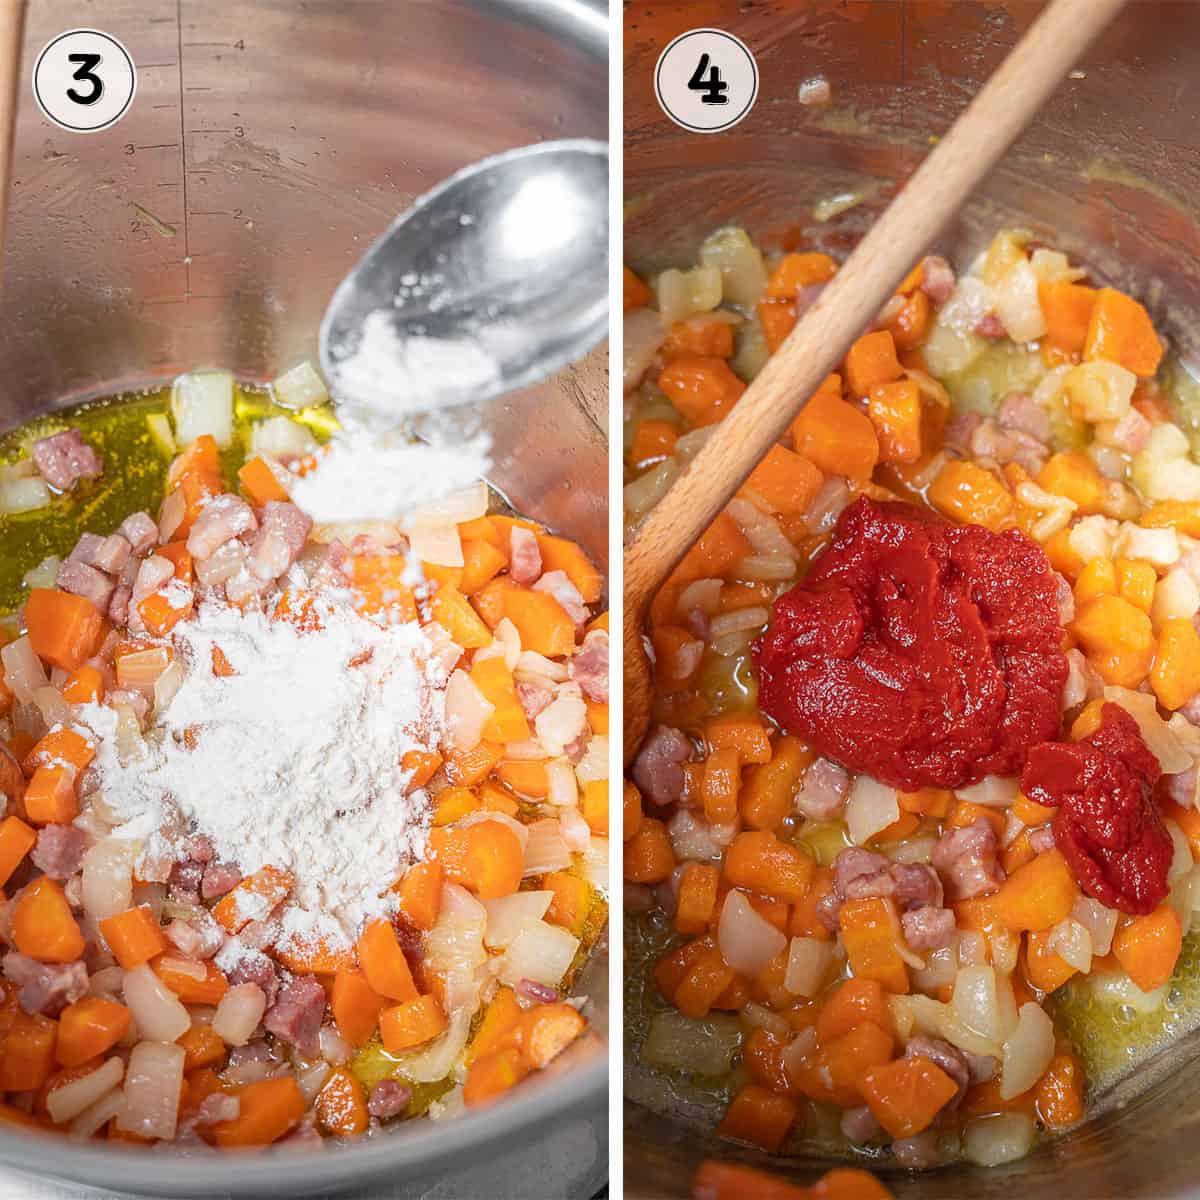 adding the flour and tomato paste to the mixture.